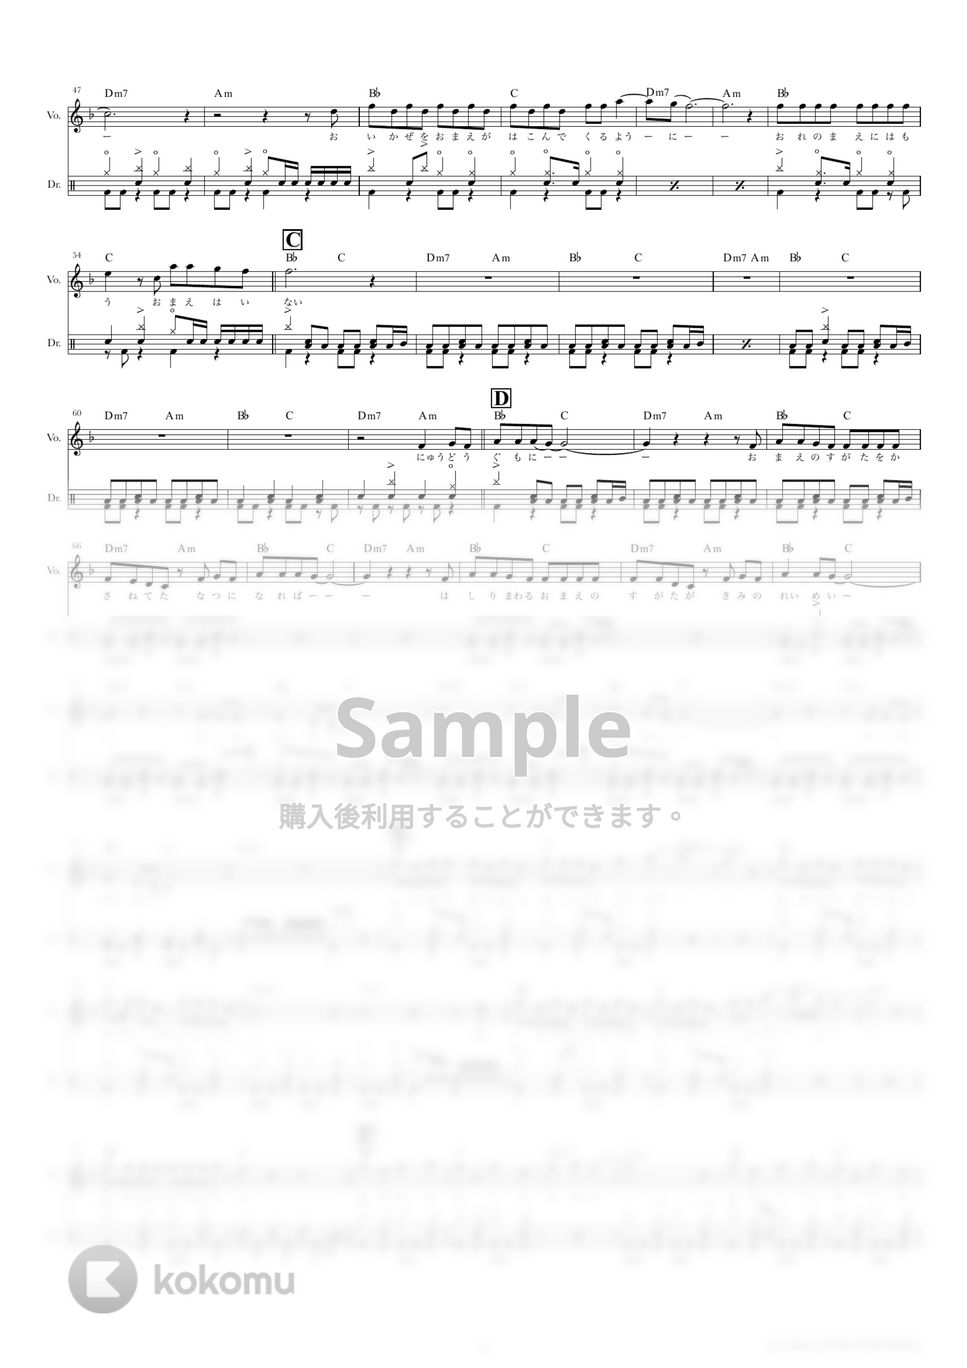 Climbgrow - POODLE (ドラムスコア・歌詞・コード付き) by TRIAD GUITAR SCHOOL